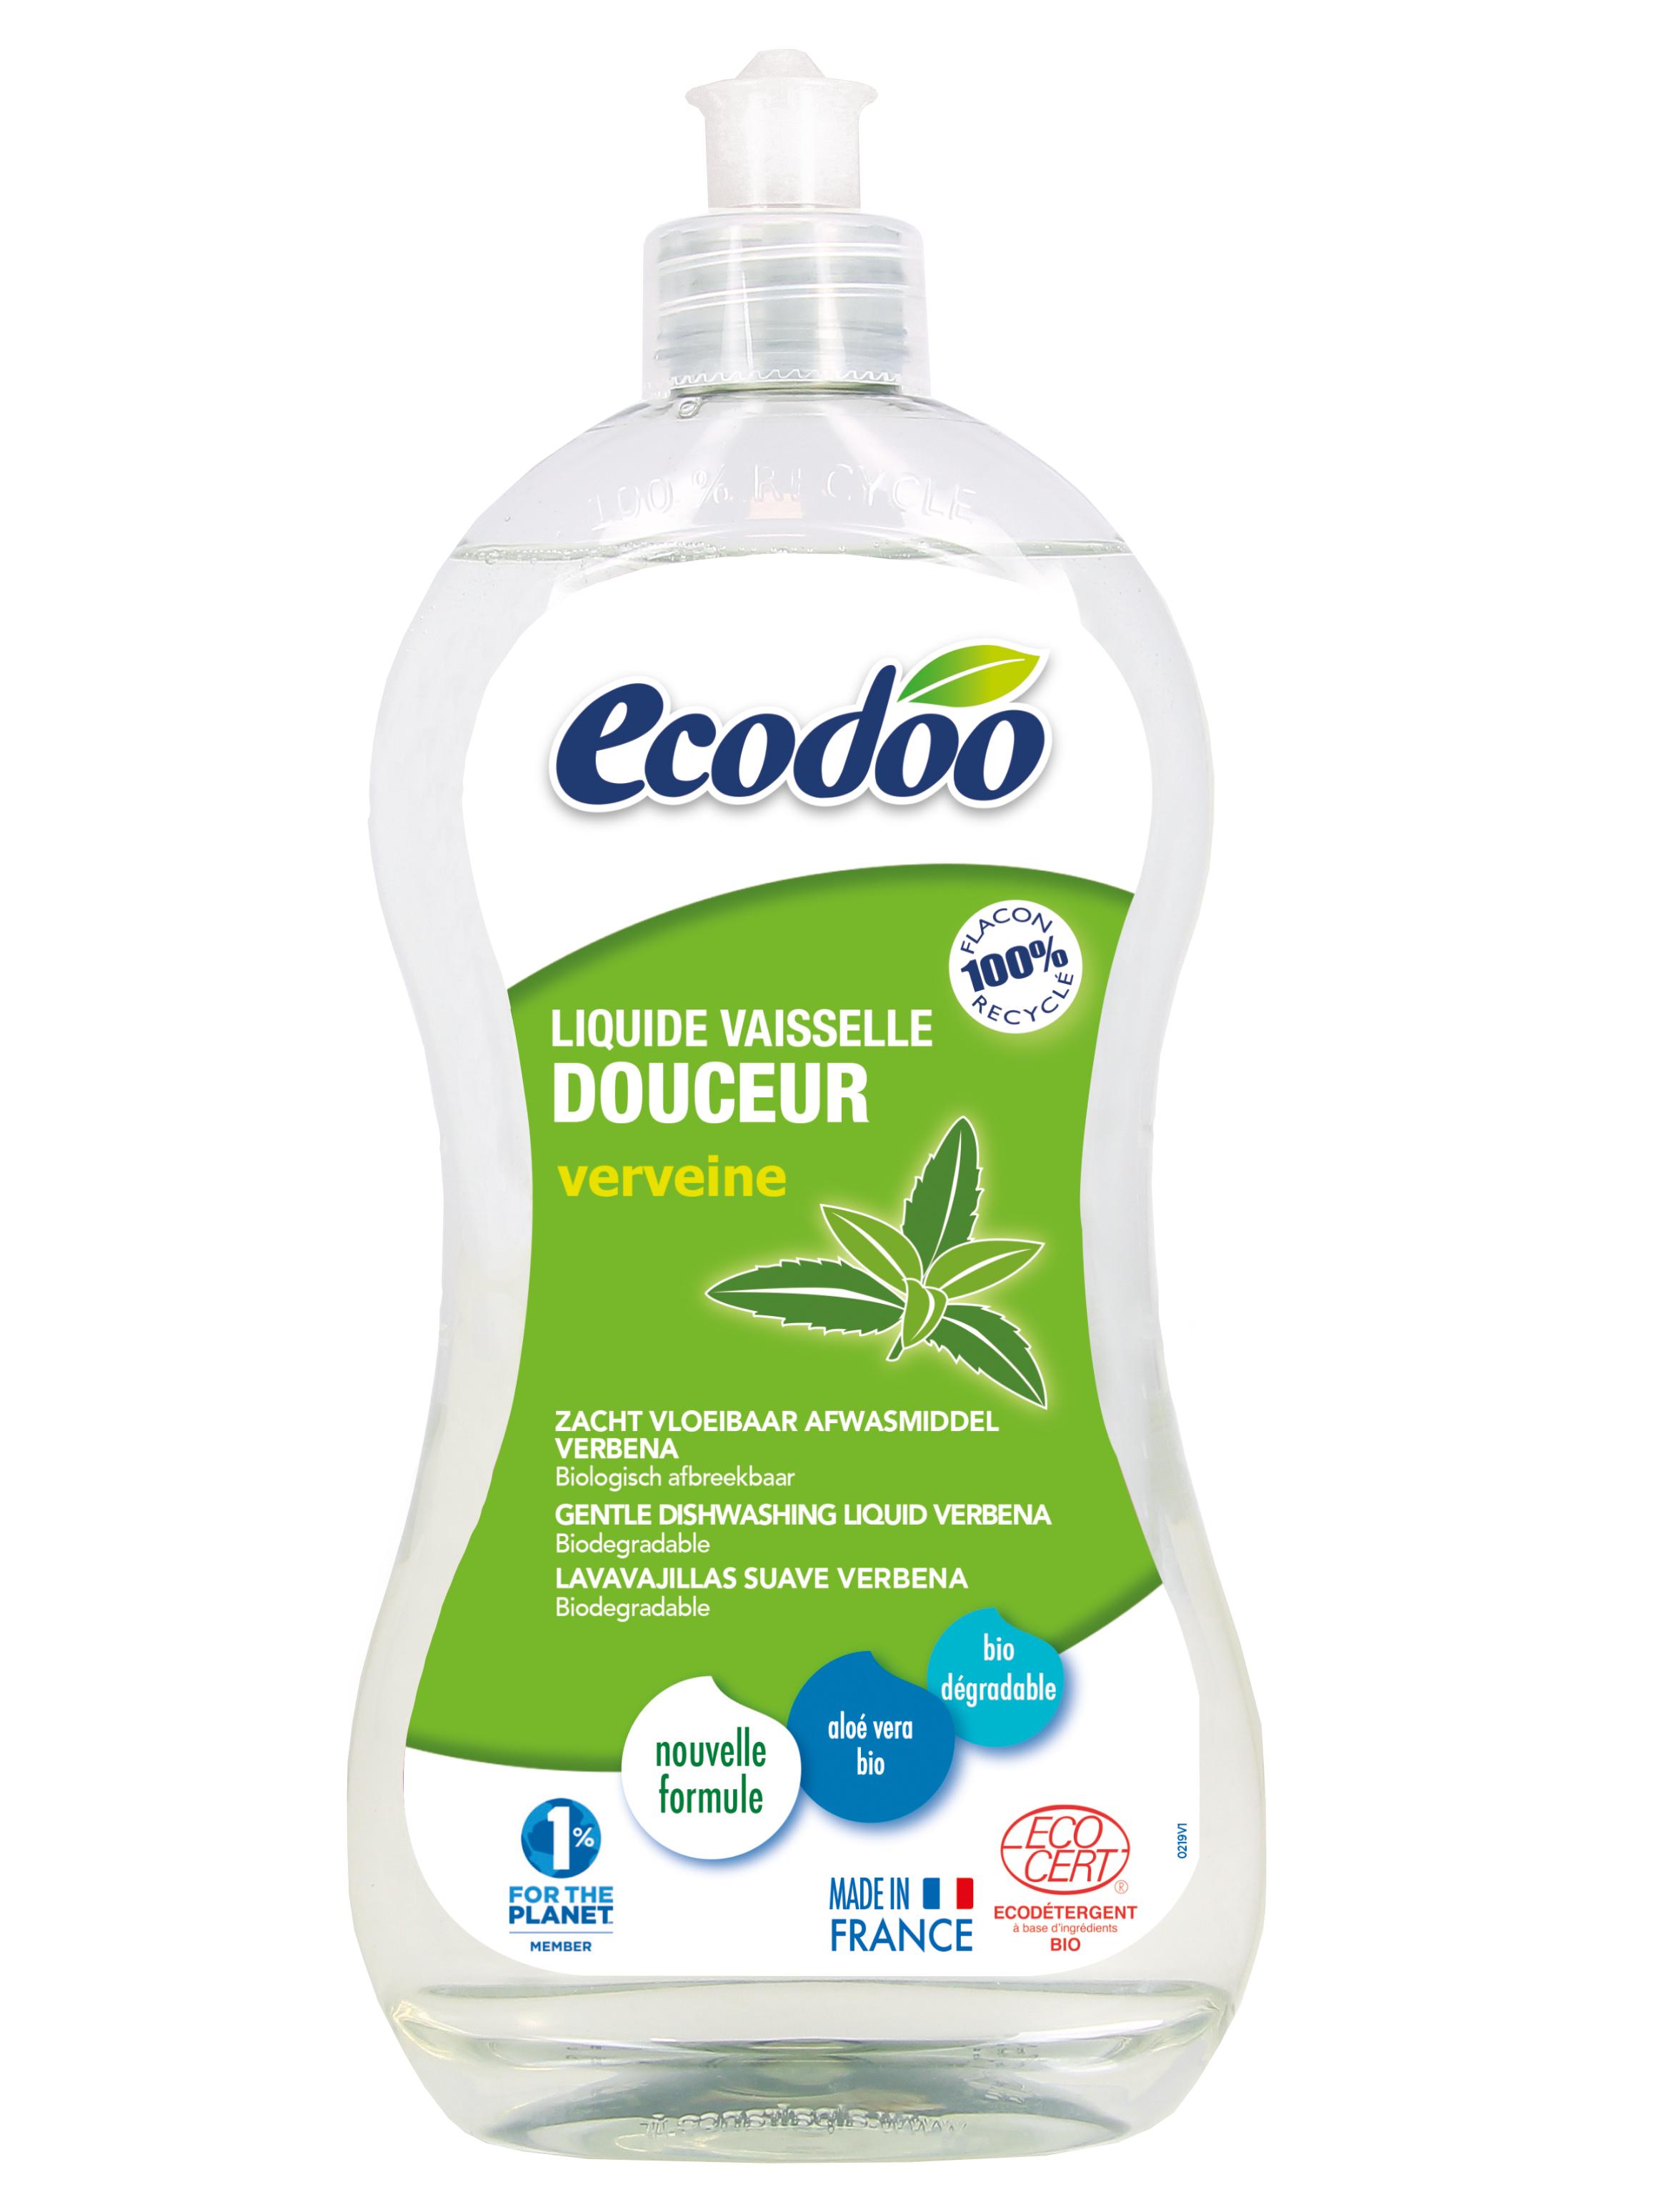 🌺🌿 Liquide vaisselle douceur verveine - 1L - Ecodoo